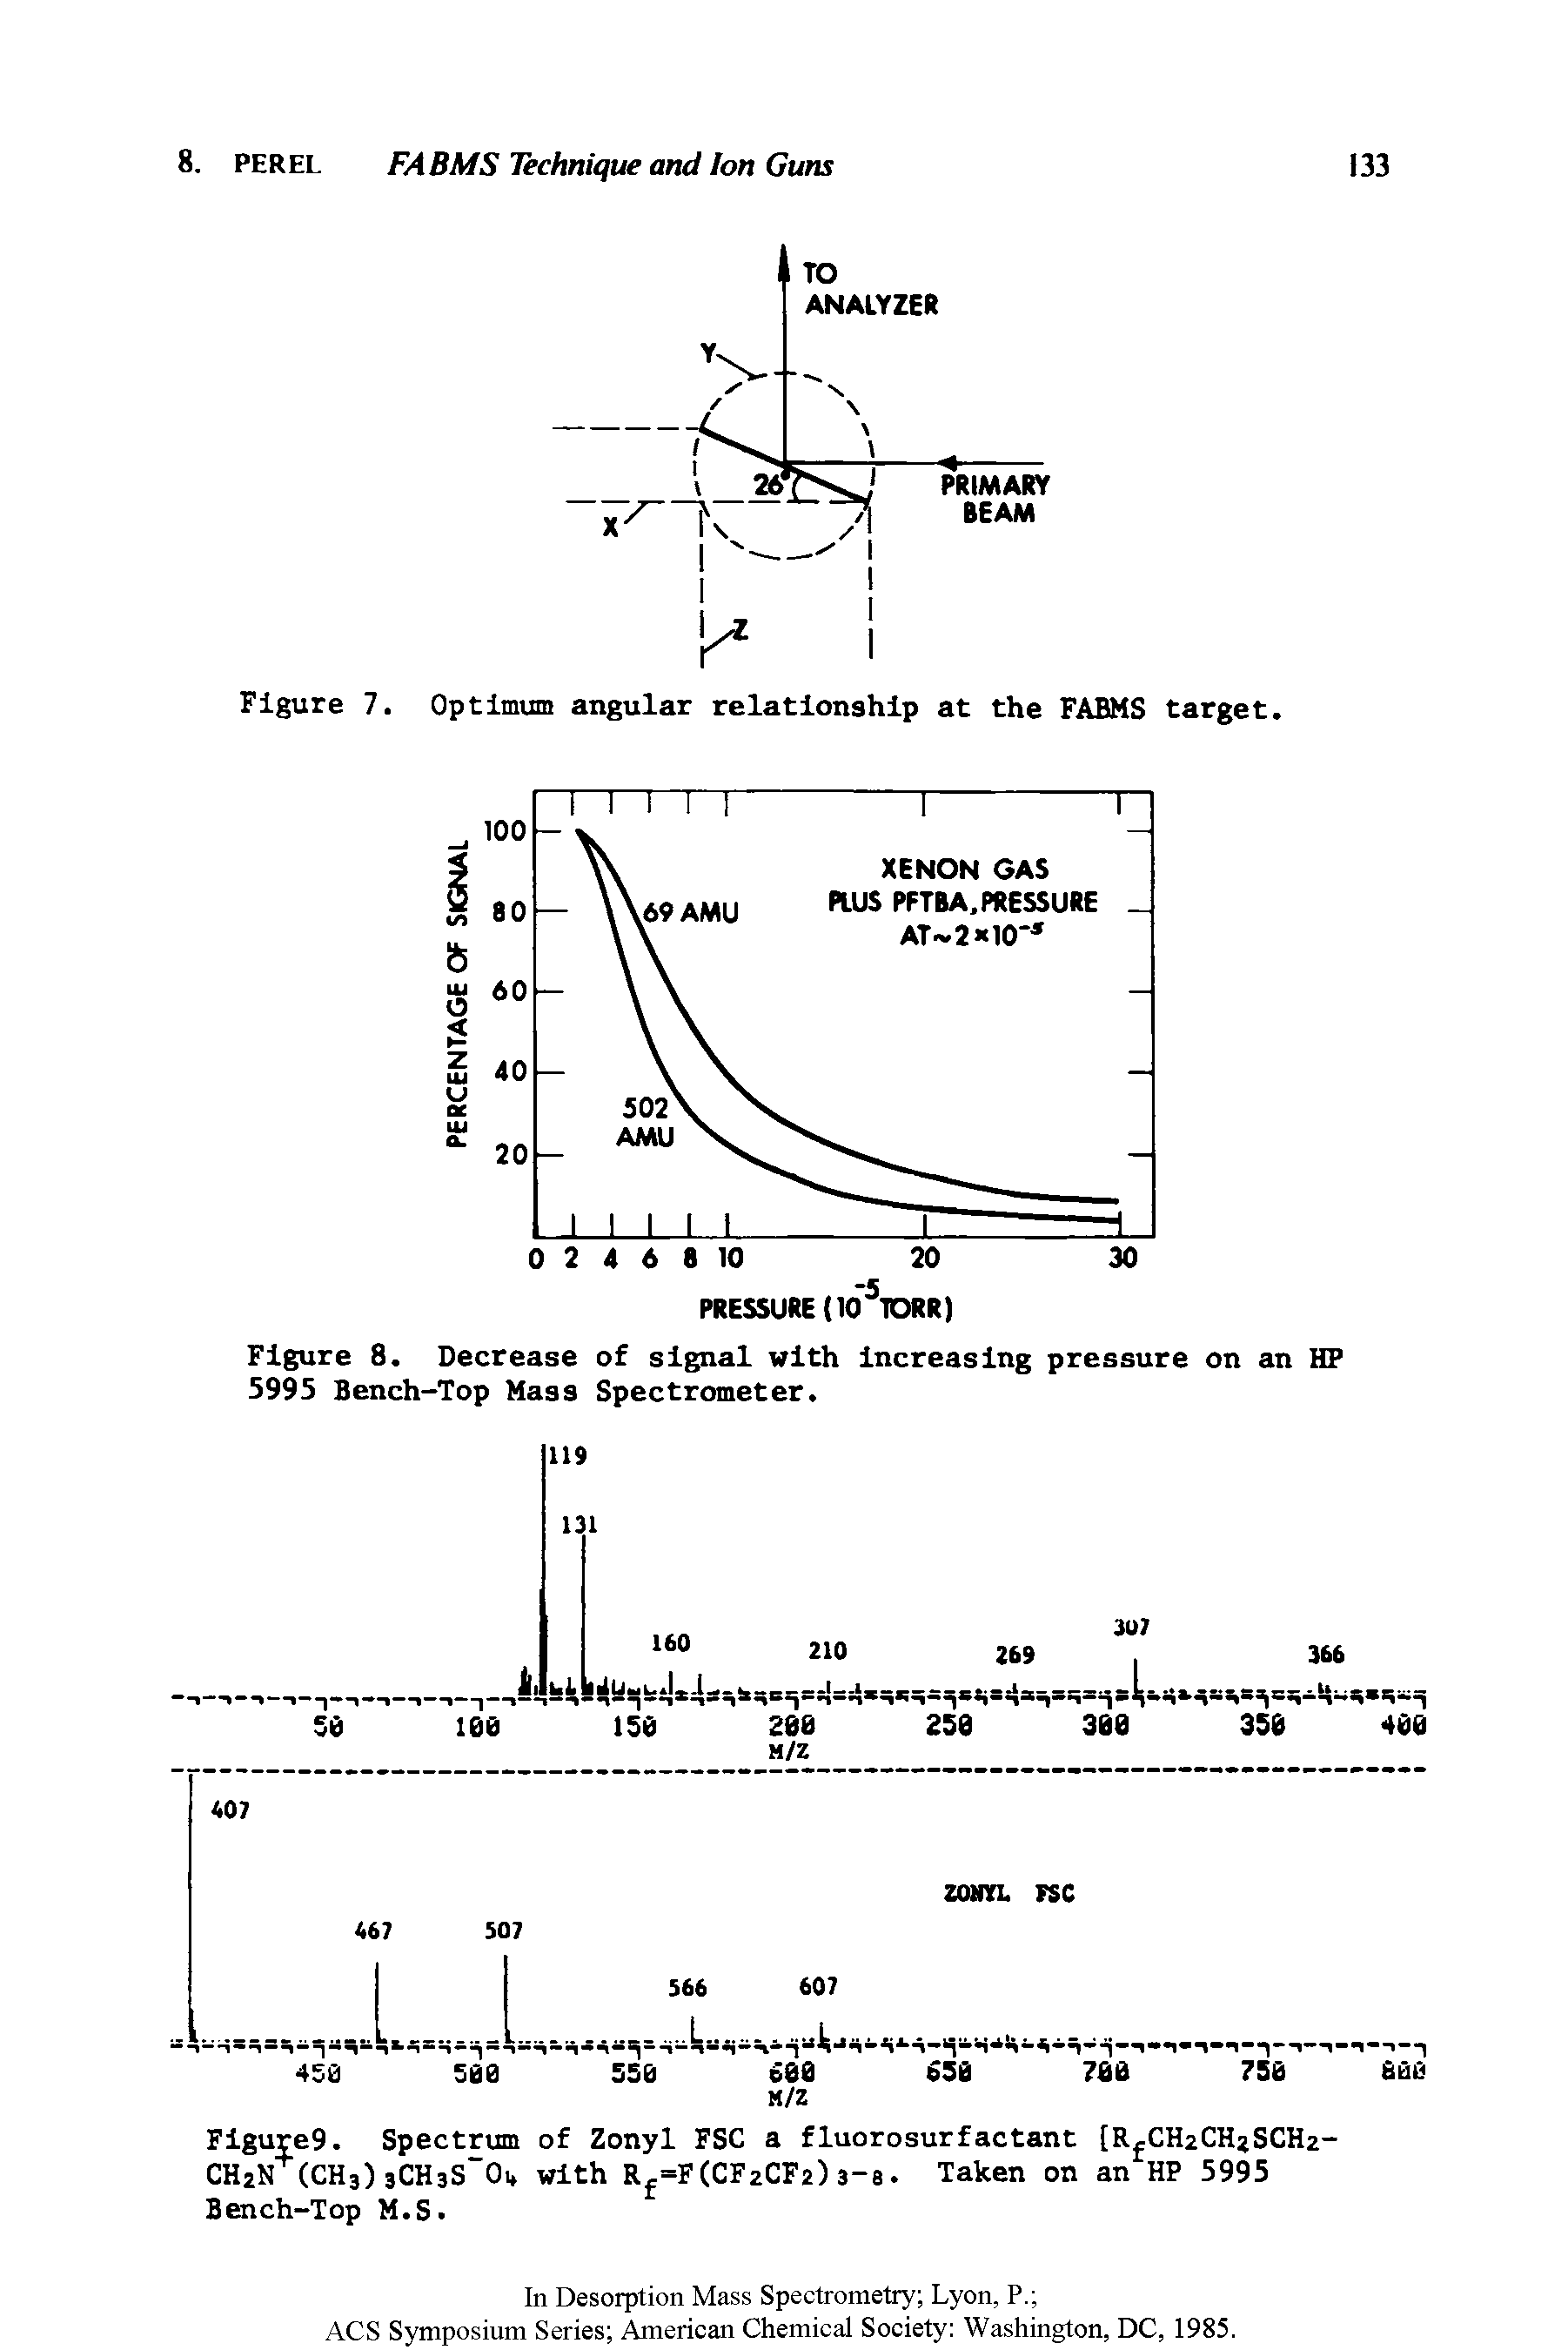 Figure9. Spectrum of Zonyl FSC a fluorosurfactant [R CfoCHzSCfo-CH2N+(CH3) 3CH3S-0i, with Rf=F(CF2CF2) 3-8. Taken on an HP 5995 Bench-Top M.S.